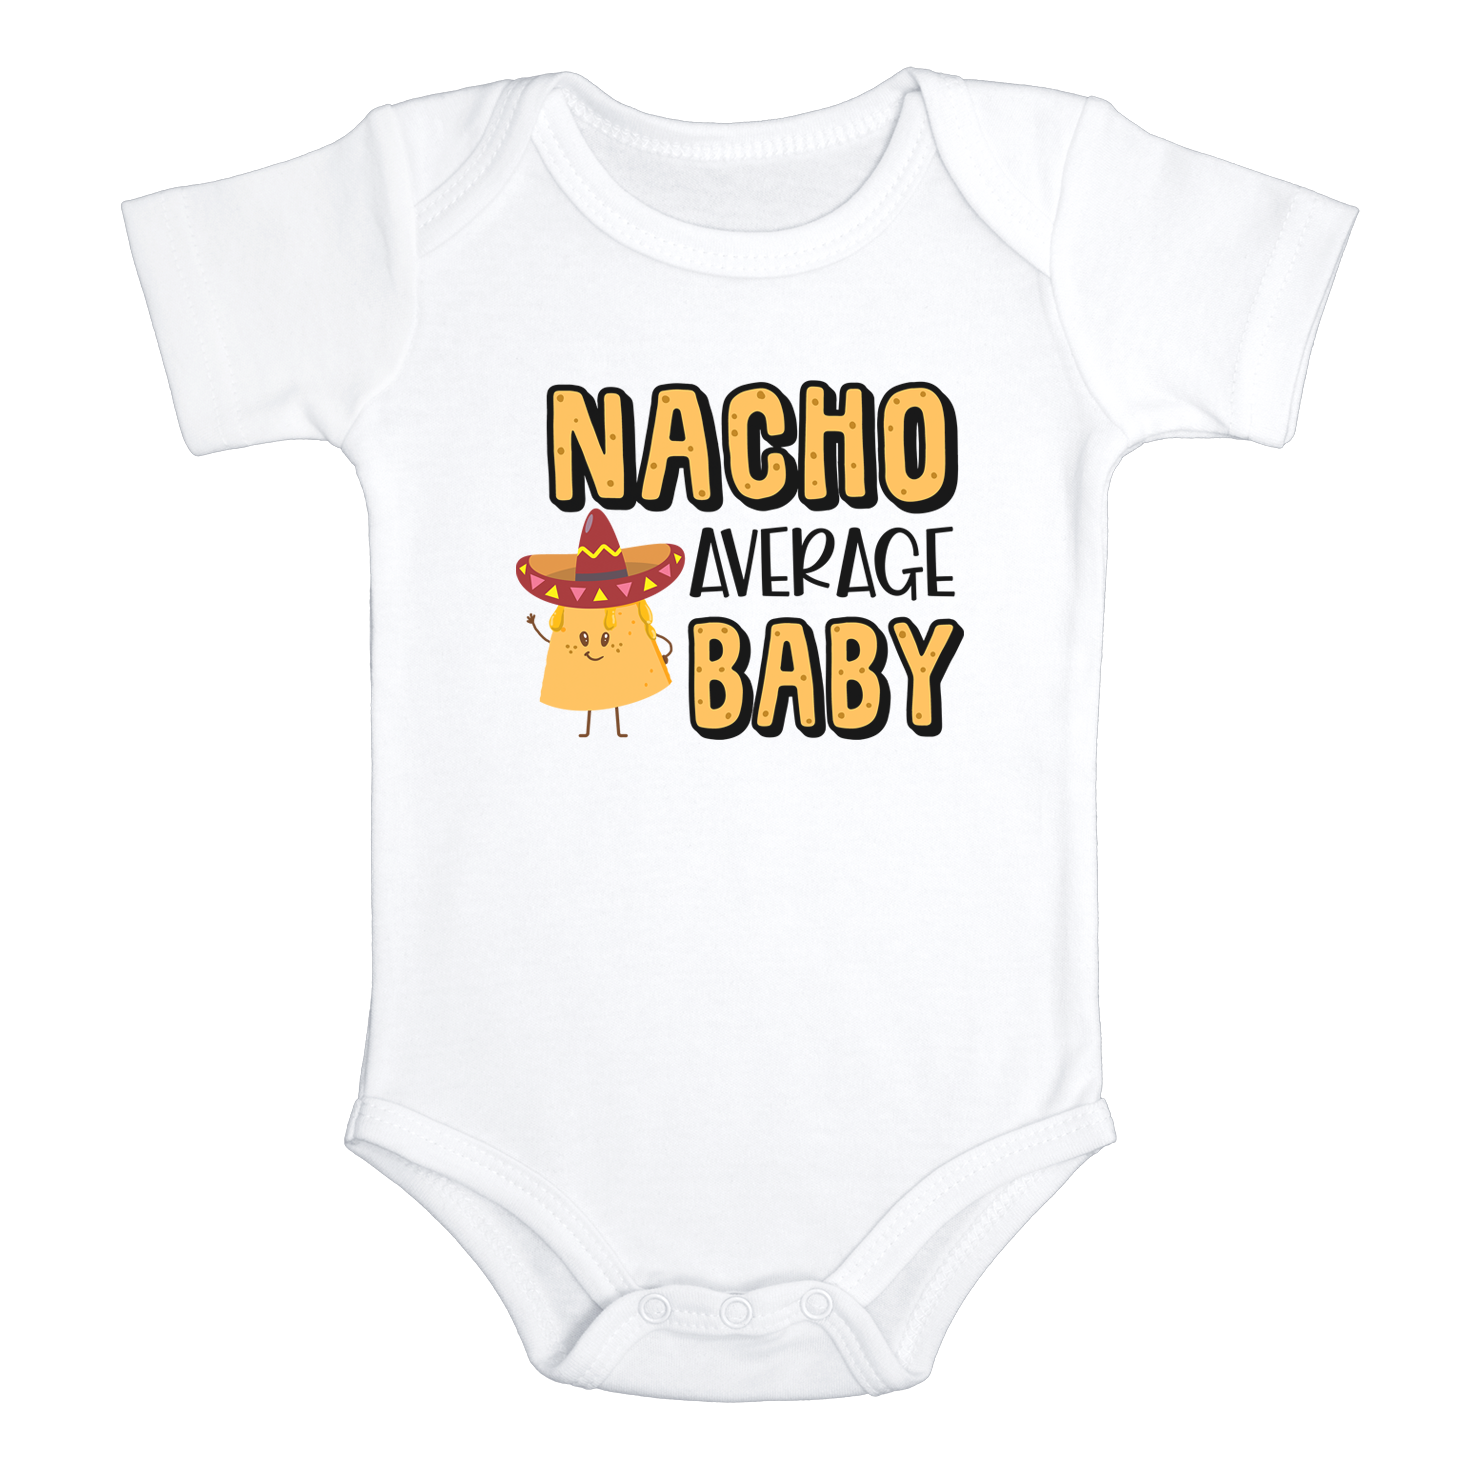 NACHO AVERAGE BABY Funny baby onesies bodysuit (white: short or long sleeve) - HappyAddition